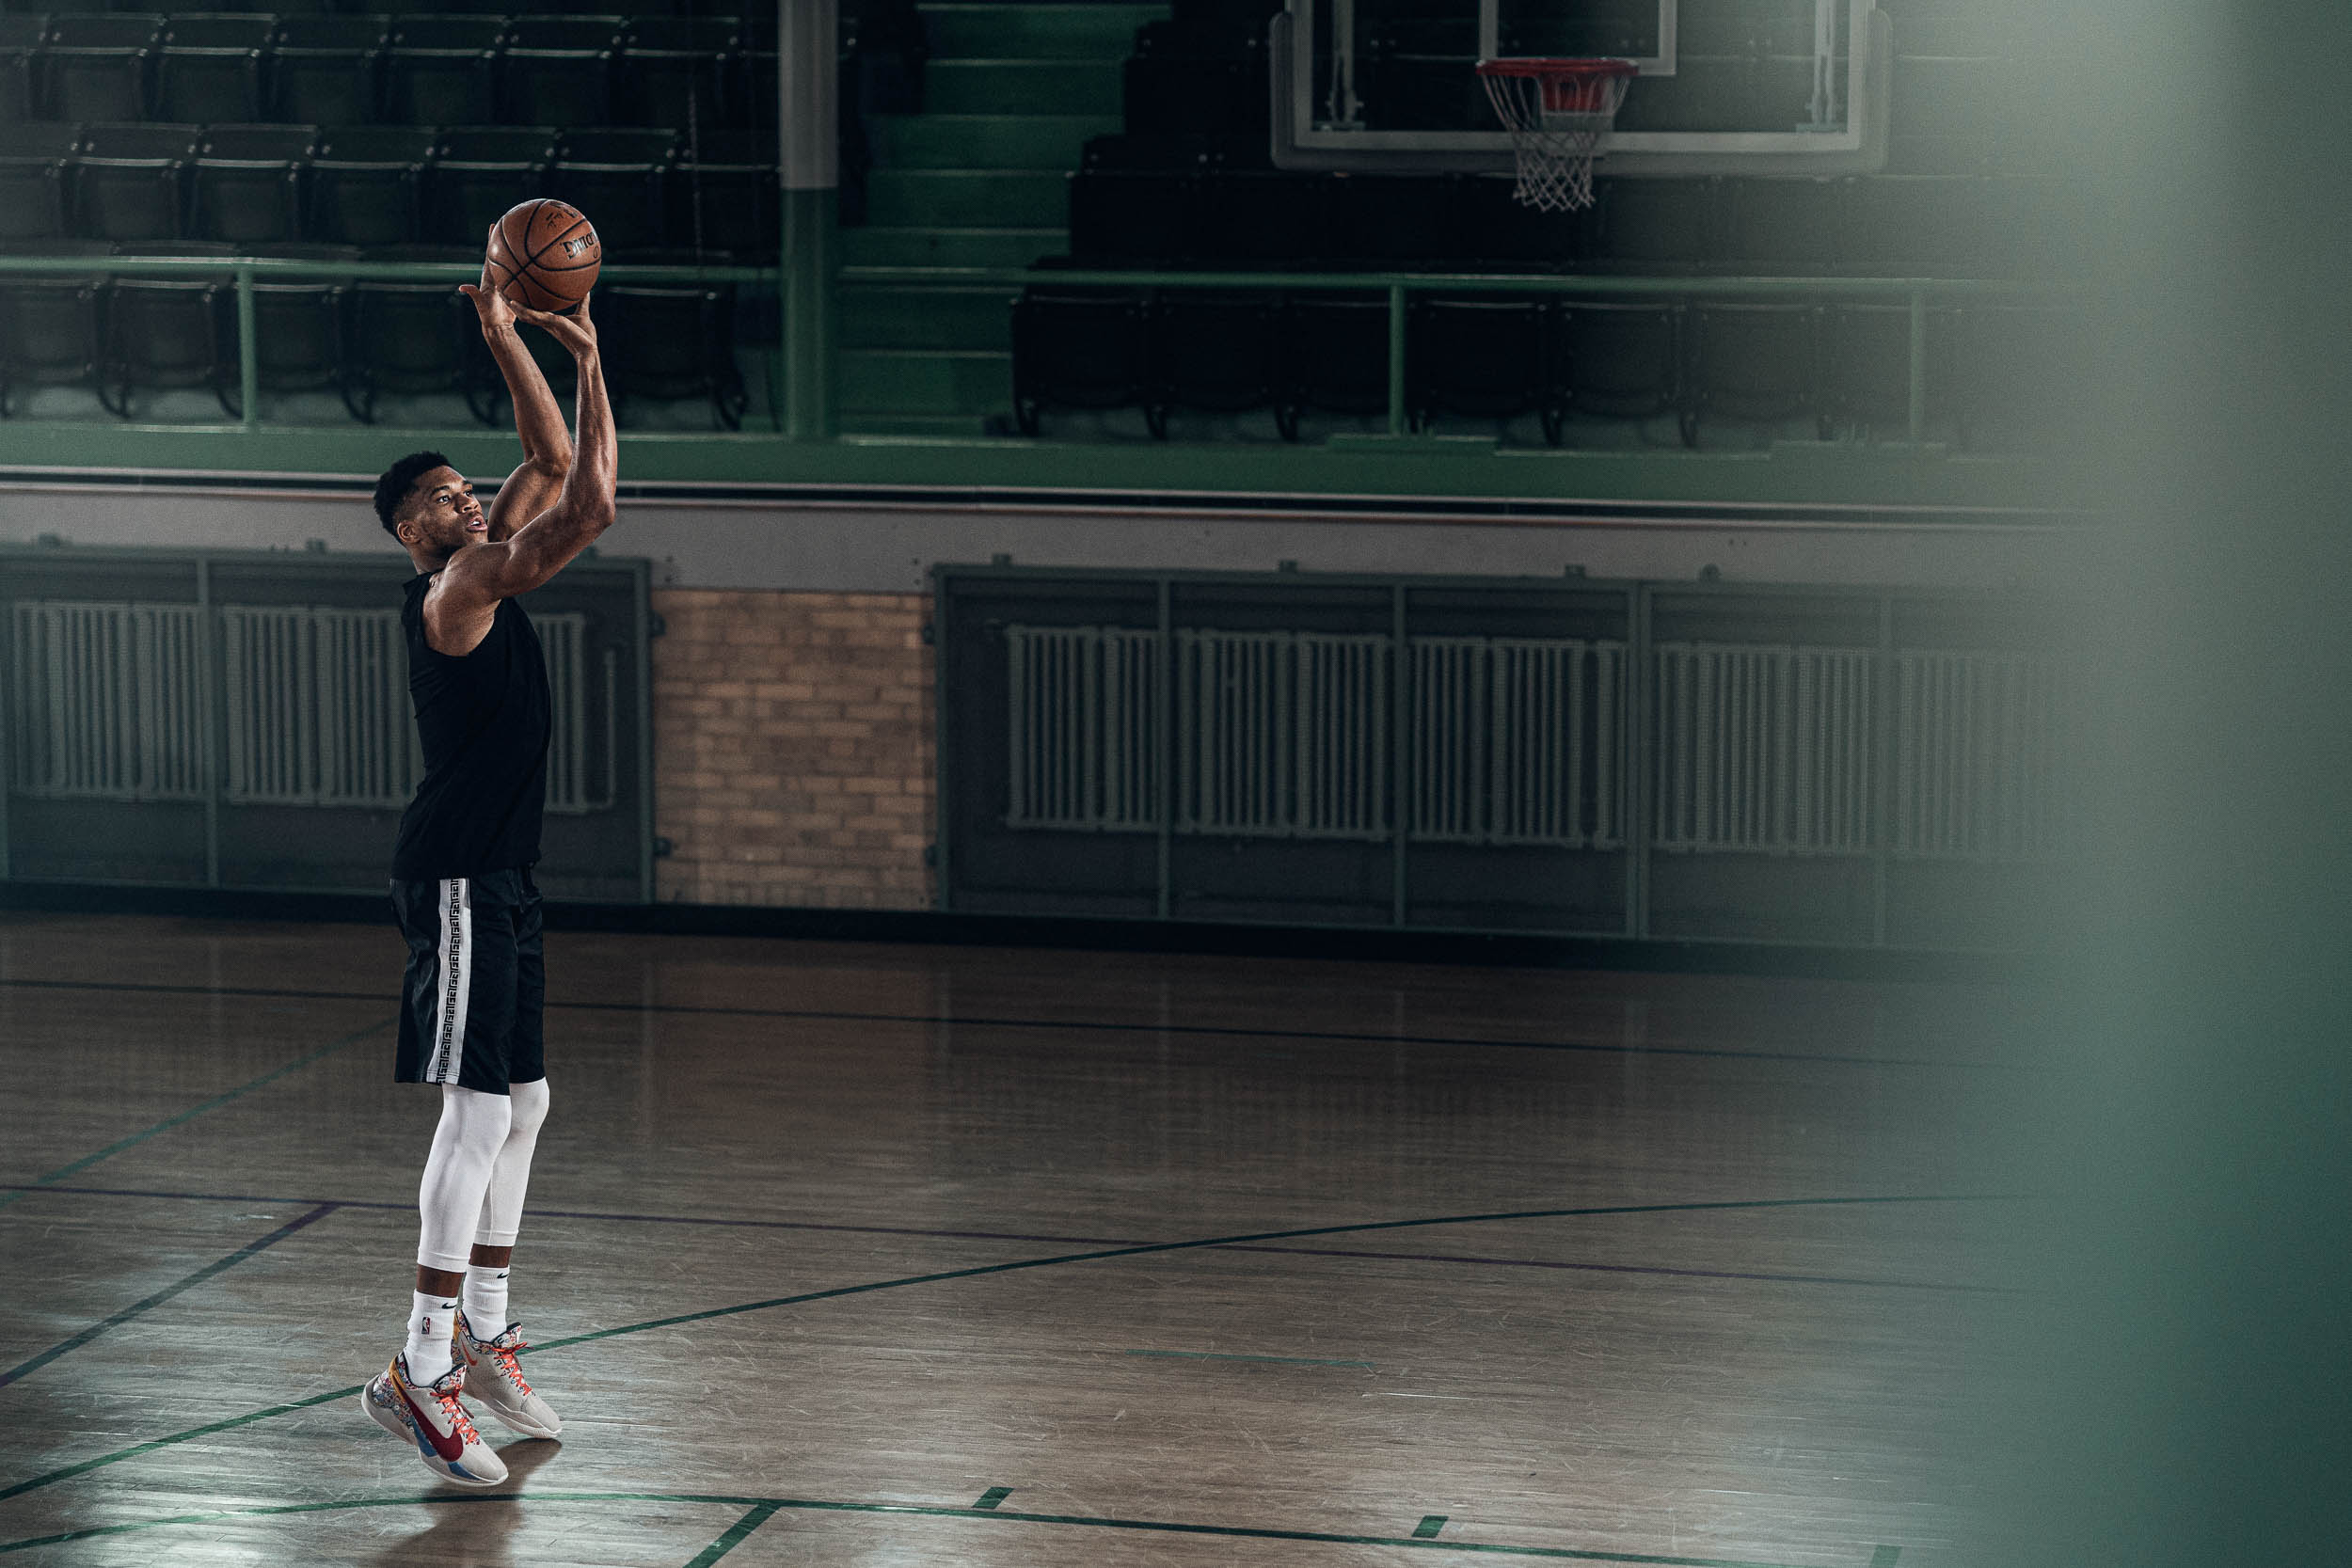 NBA WORLD CHAMPION MVP MILKWAUKEE BUCKS GIANNIS ANTETOKOUNMPO PHOTOGRAPHED BY COMMERCIAL BASKETBALL ADVERTISING PHOTOGRAPHER IN BALTIMORE MD WASHINGTON DC